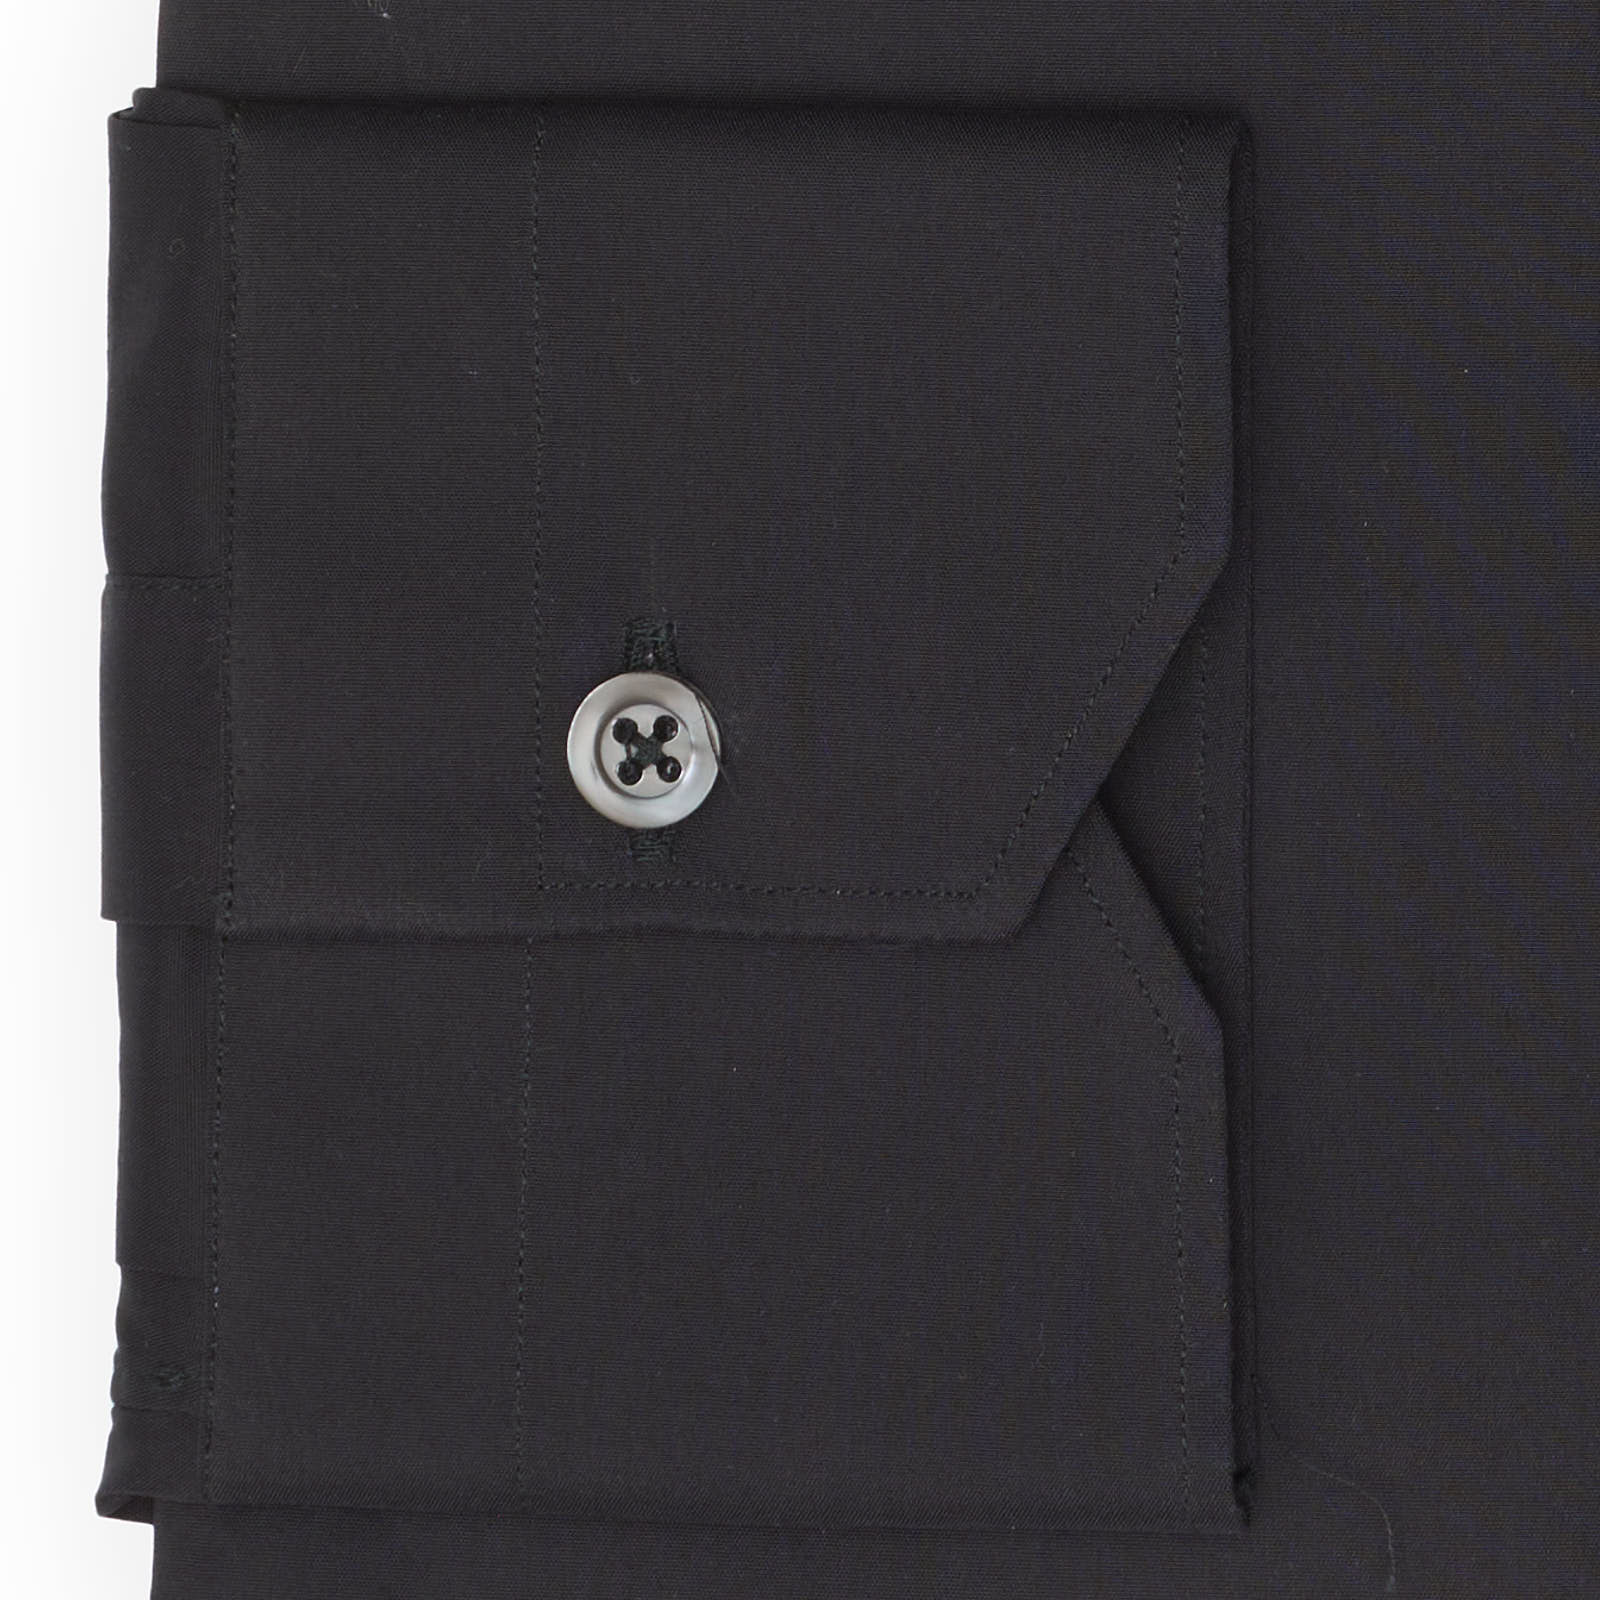 VANNUCCI Milano Black Stretch Dress Shirt NEW